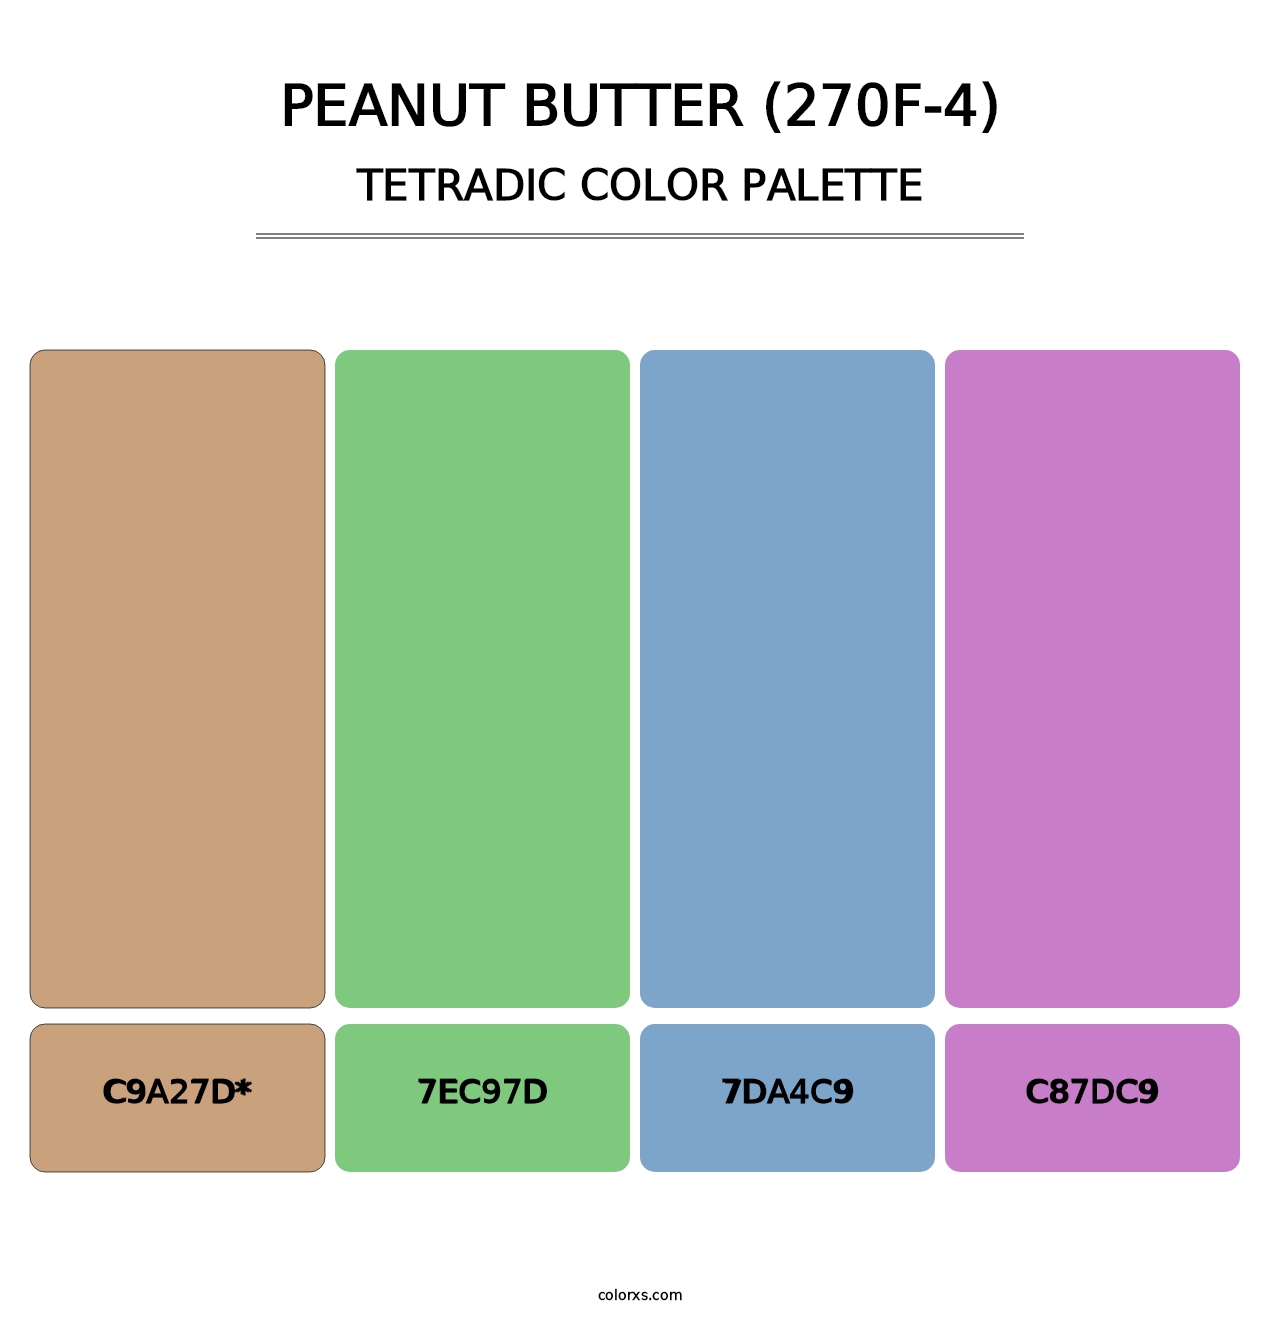 Peanut Butter (270F-4) - Tetradic Color Palette